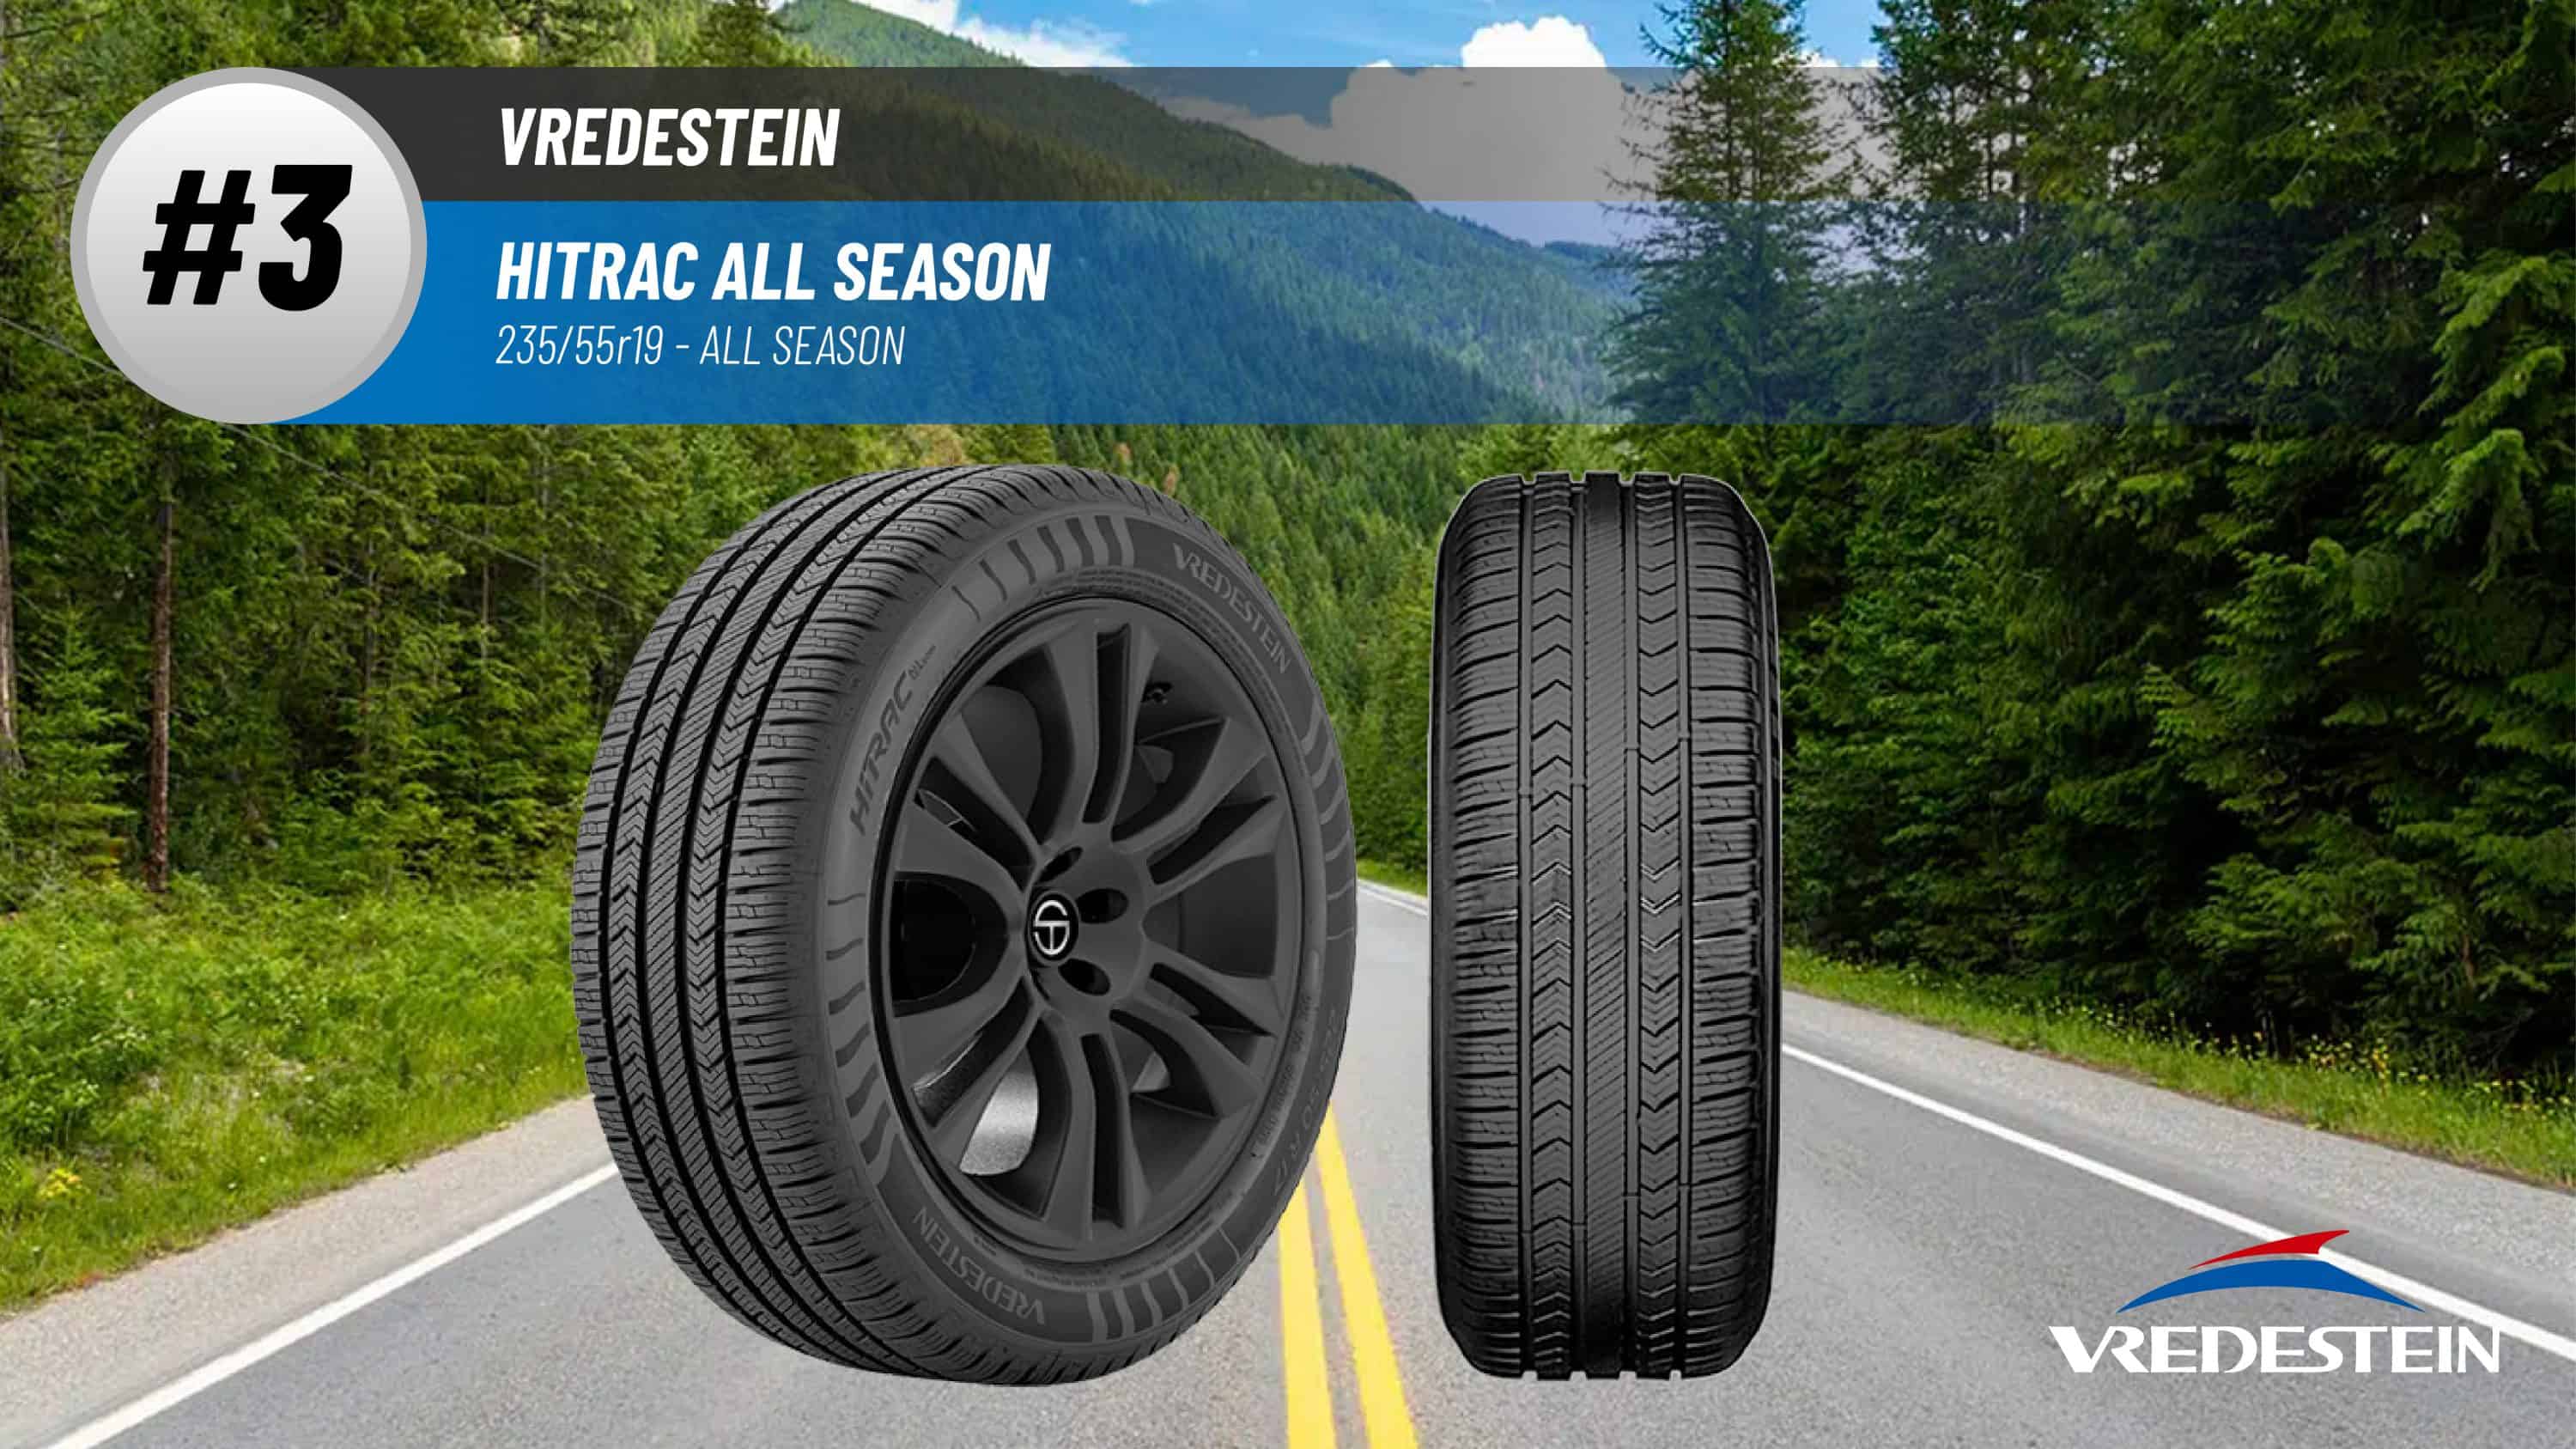 Top #3 All Season Tires: Vredestein Hitrac All Season – 235/55R19